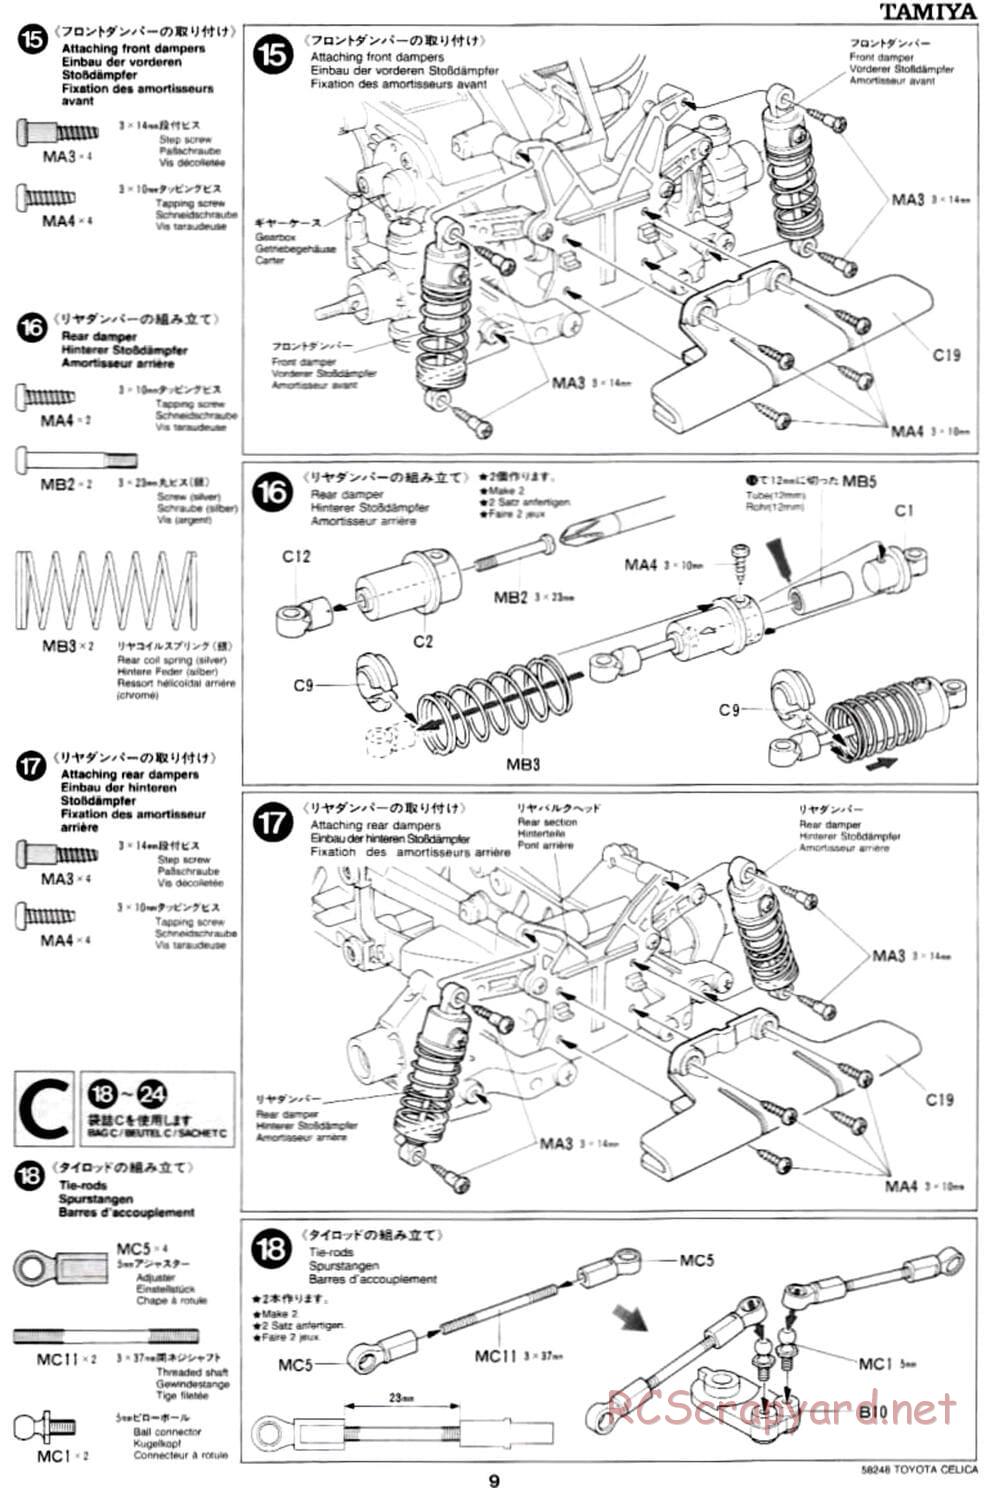 Tamiya - Toyota Celica - FF-02 Chassis - Manual - Page 9